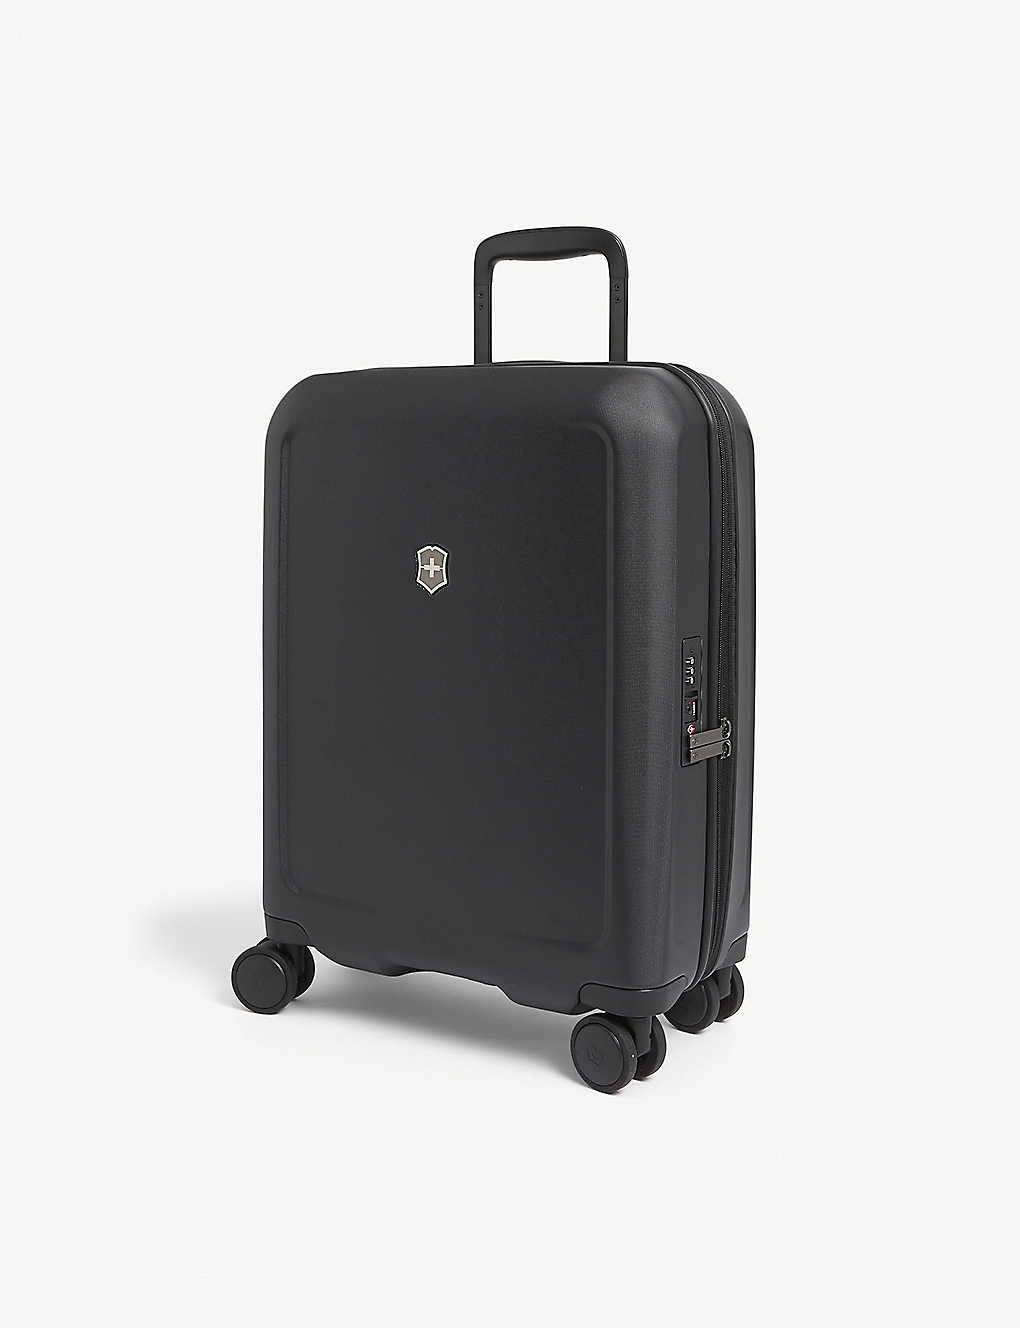 selfridges.com | VICTORINOX Connex Global carry-on shell suitcase 55cm